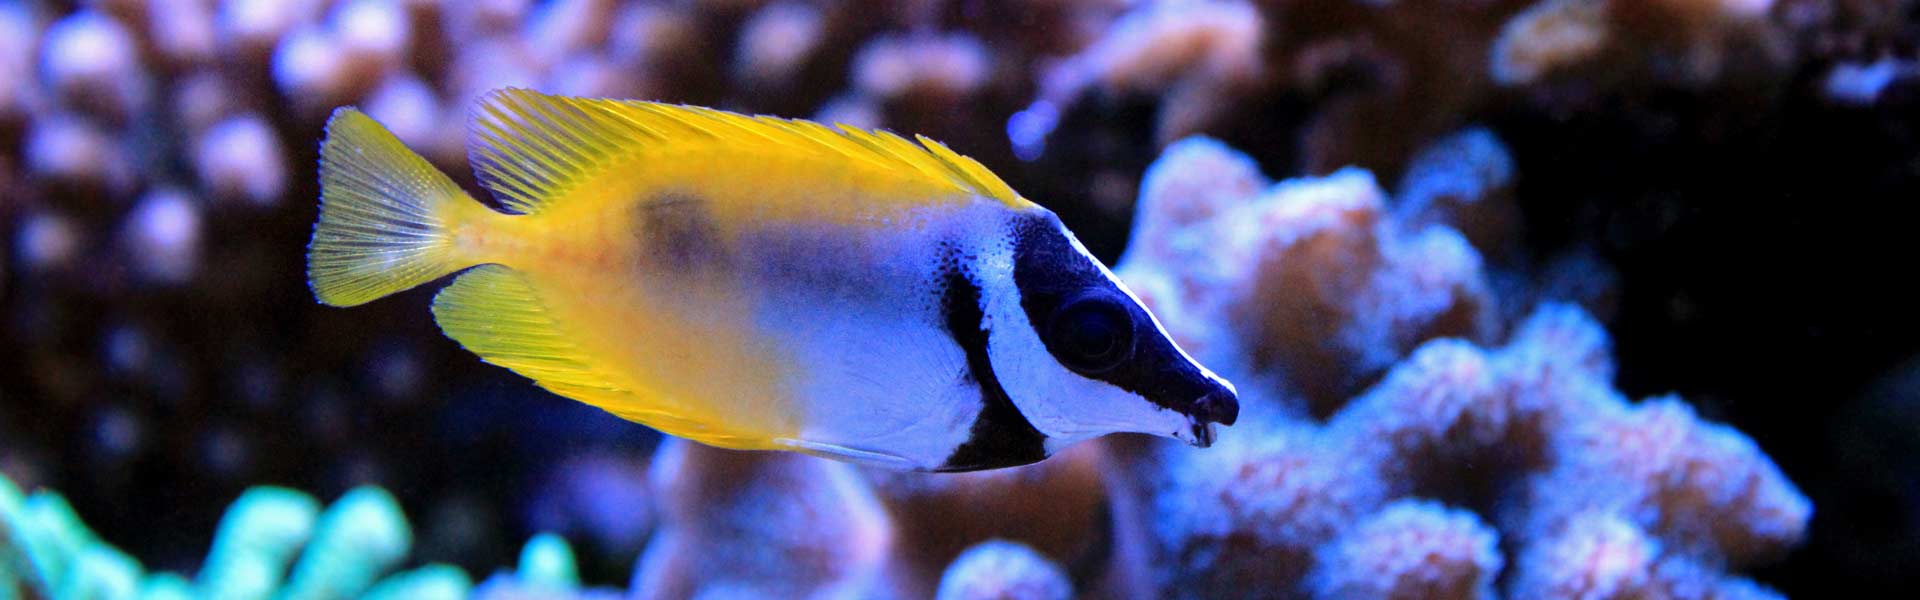 Zeewatervissen – Aquarium Neon: vissen, aquaria toebehoren